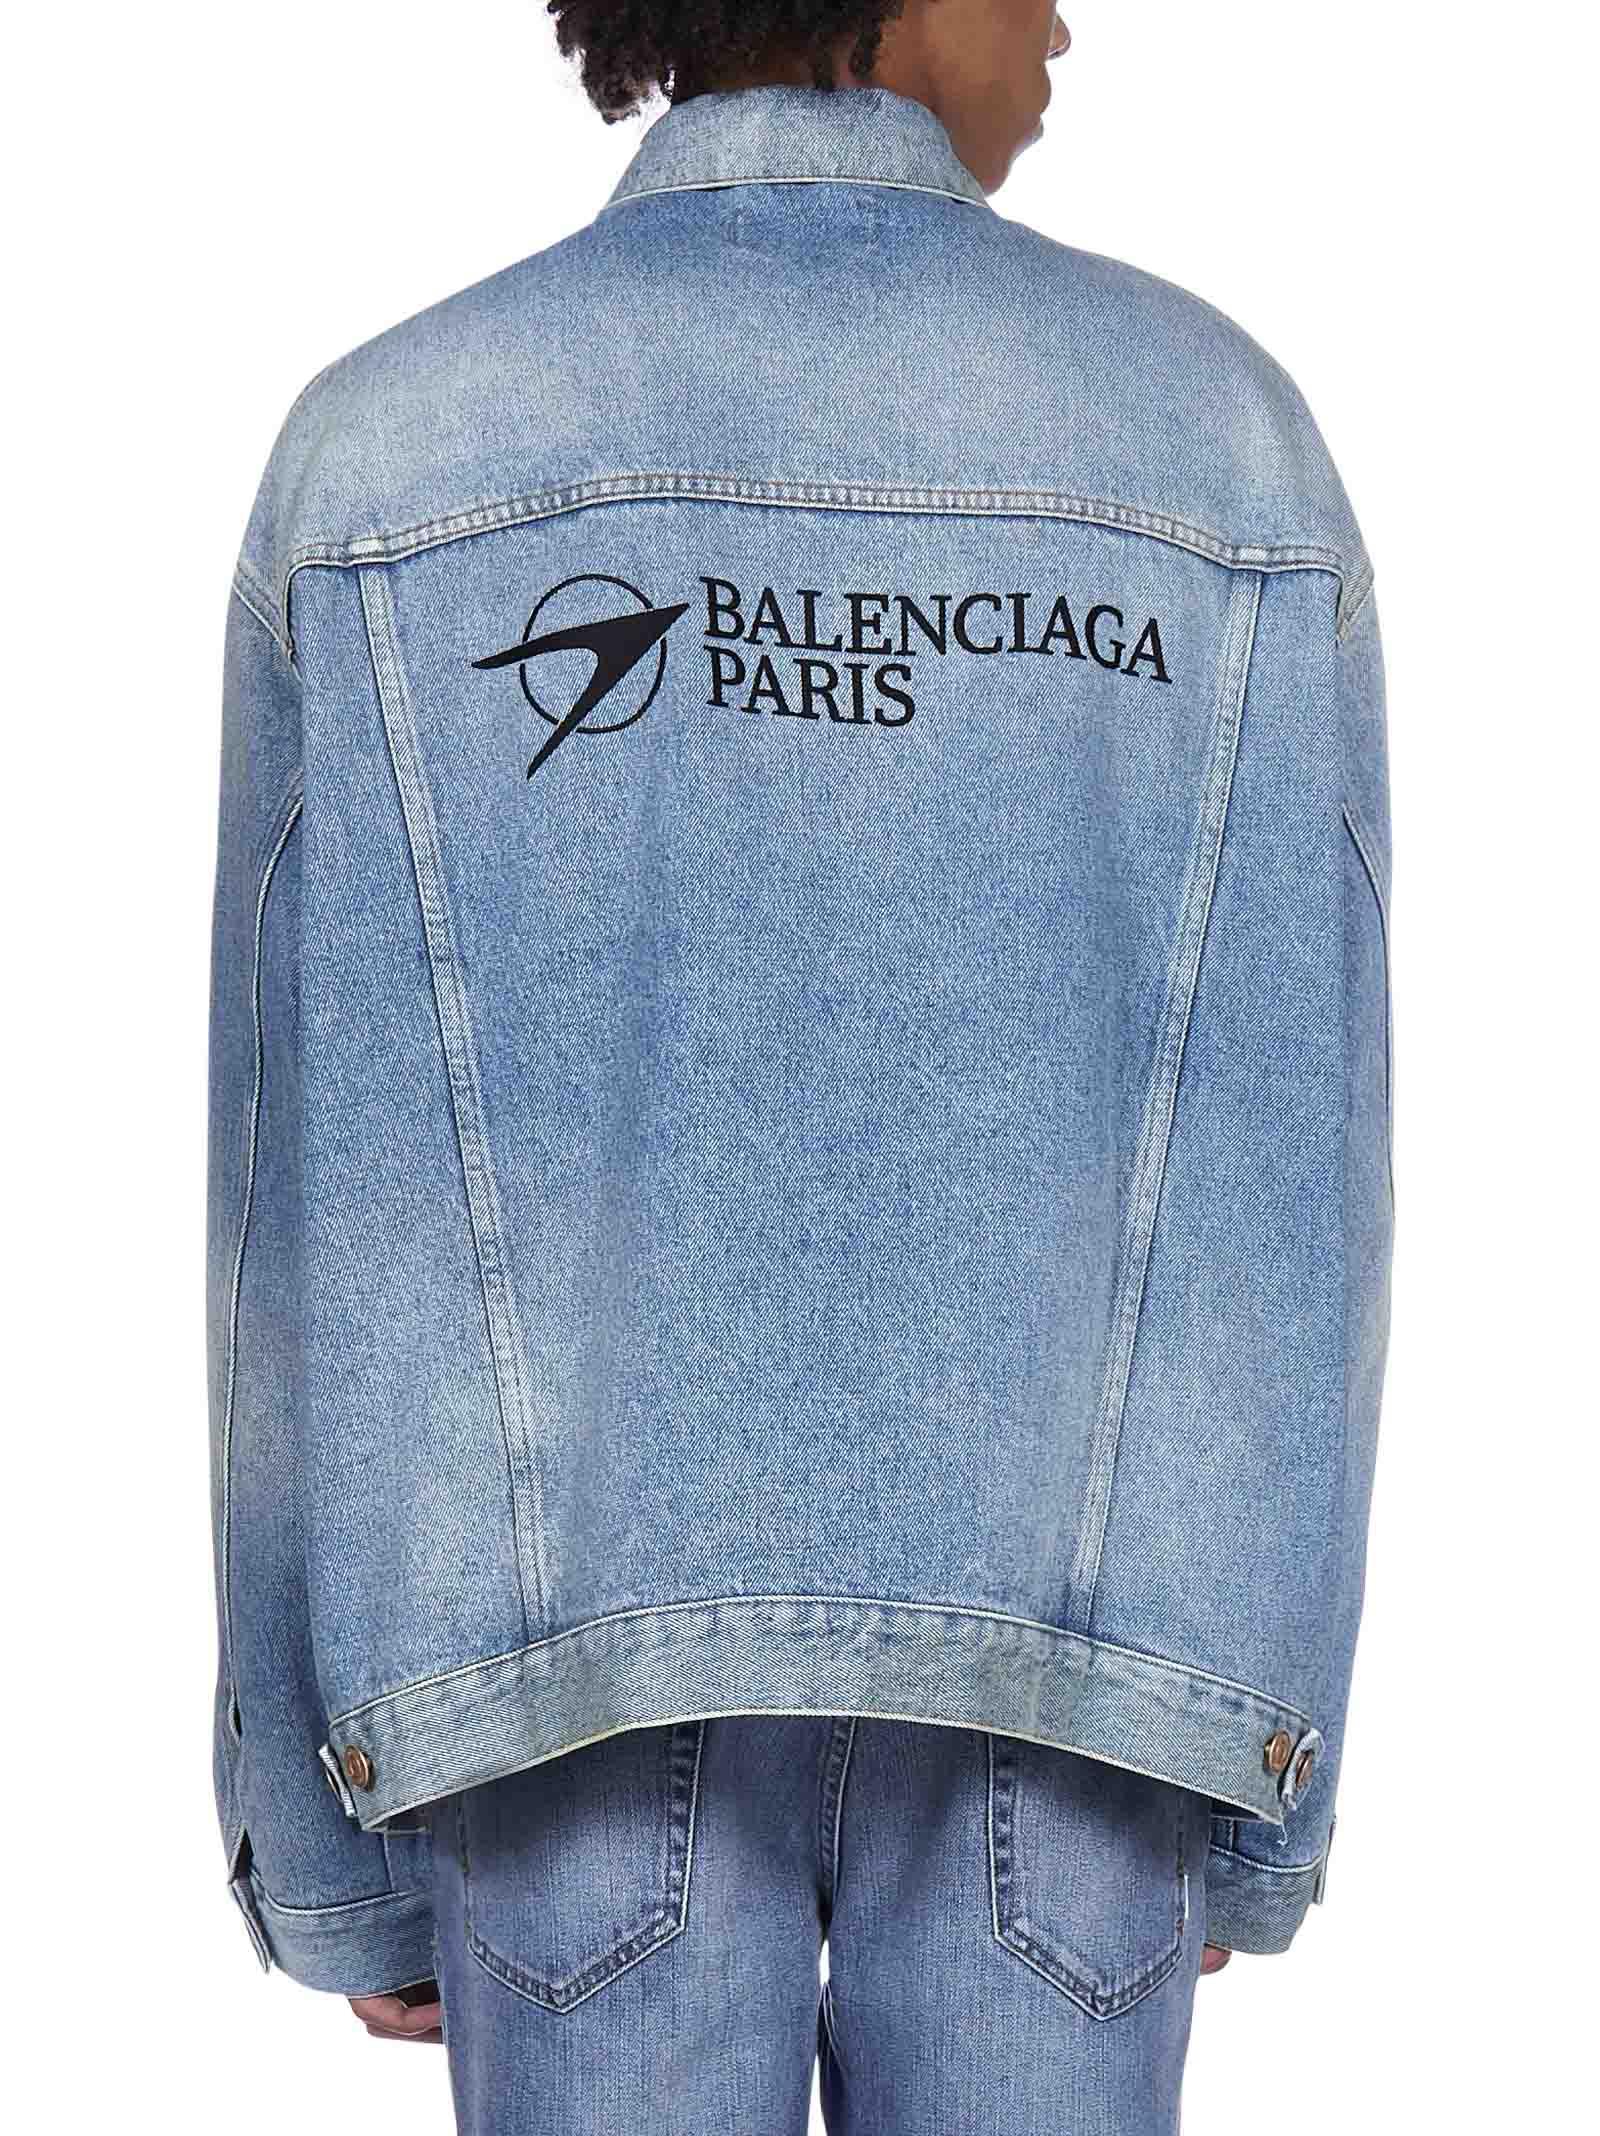 Balenciaga Paris Denim Jacket in Blue for Men | Lyst